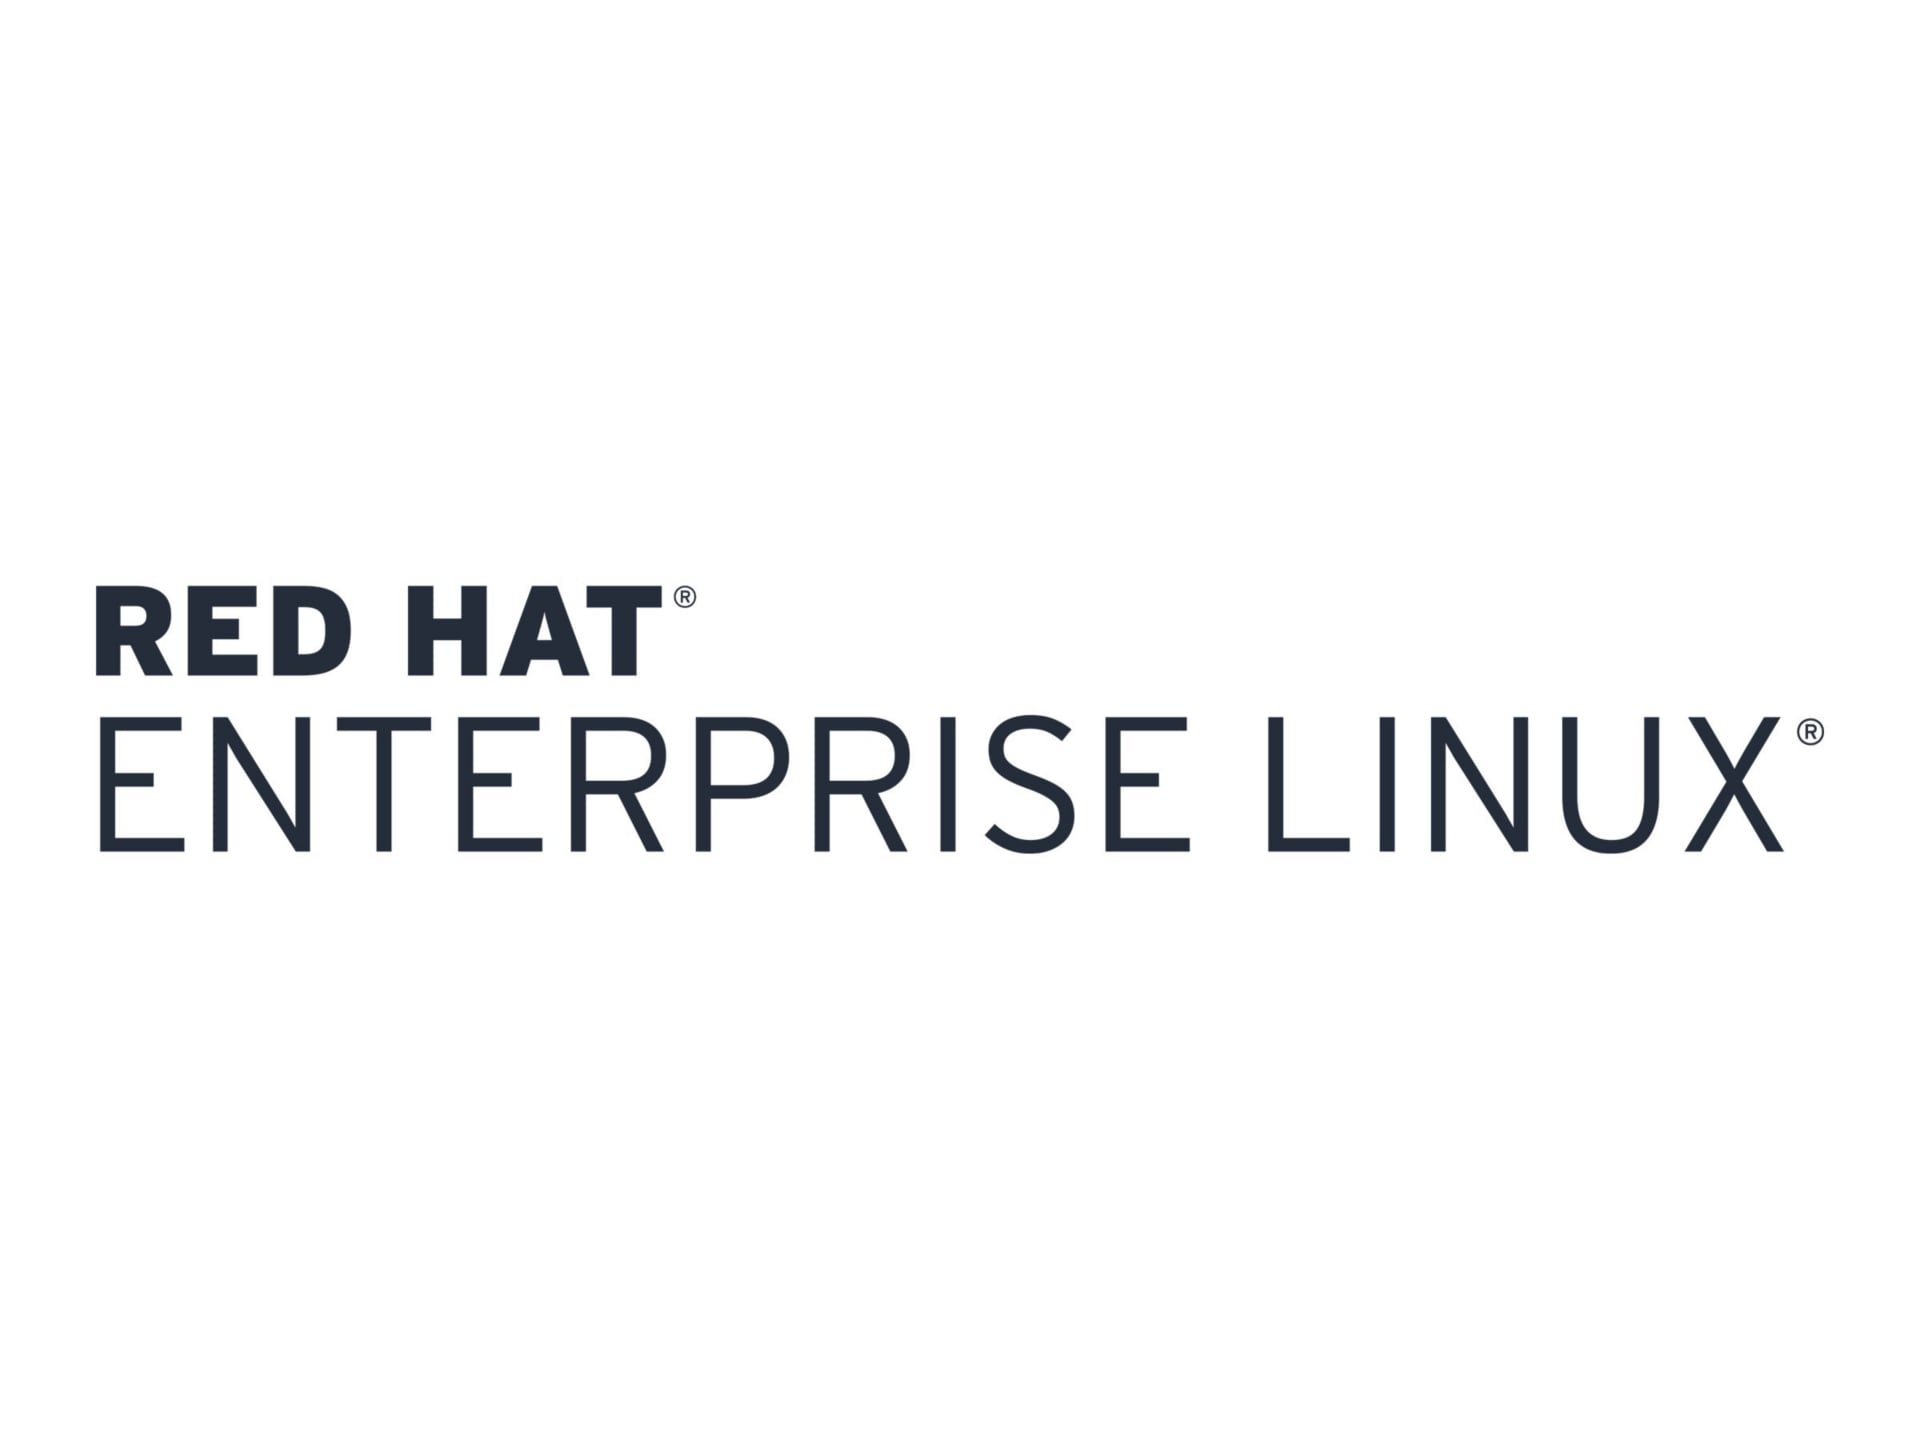 Red Hat Enterprise Linux - standard subscription - 2 sockets, 1 guest